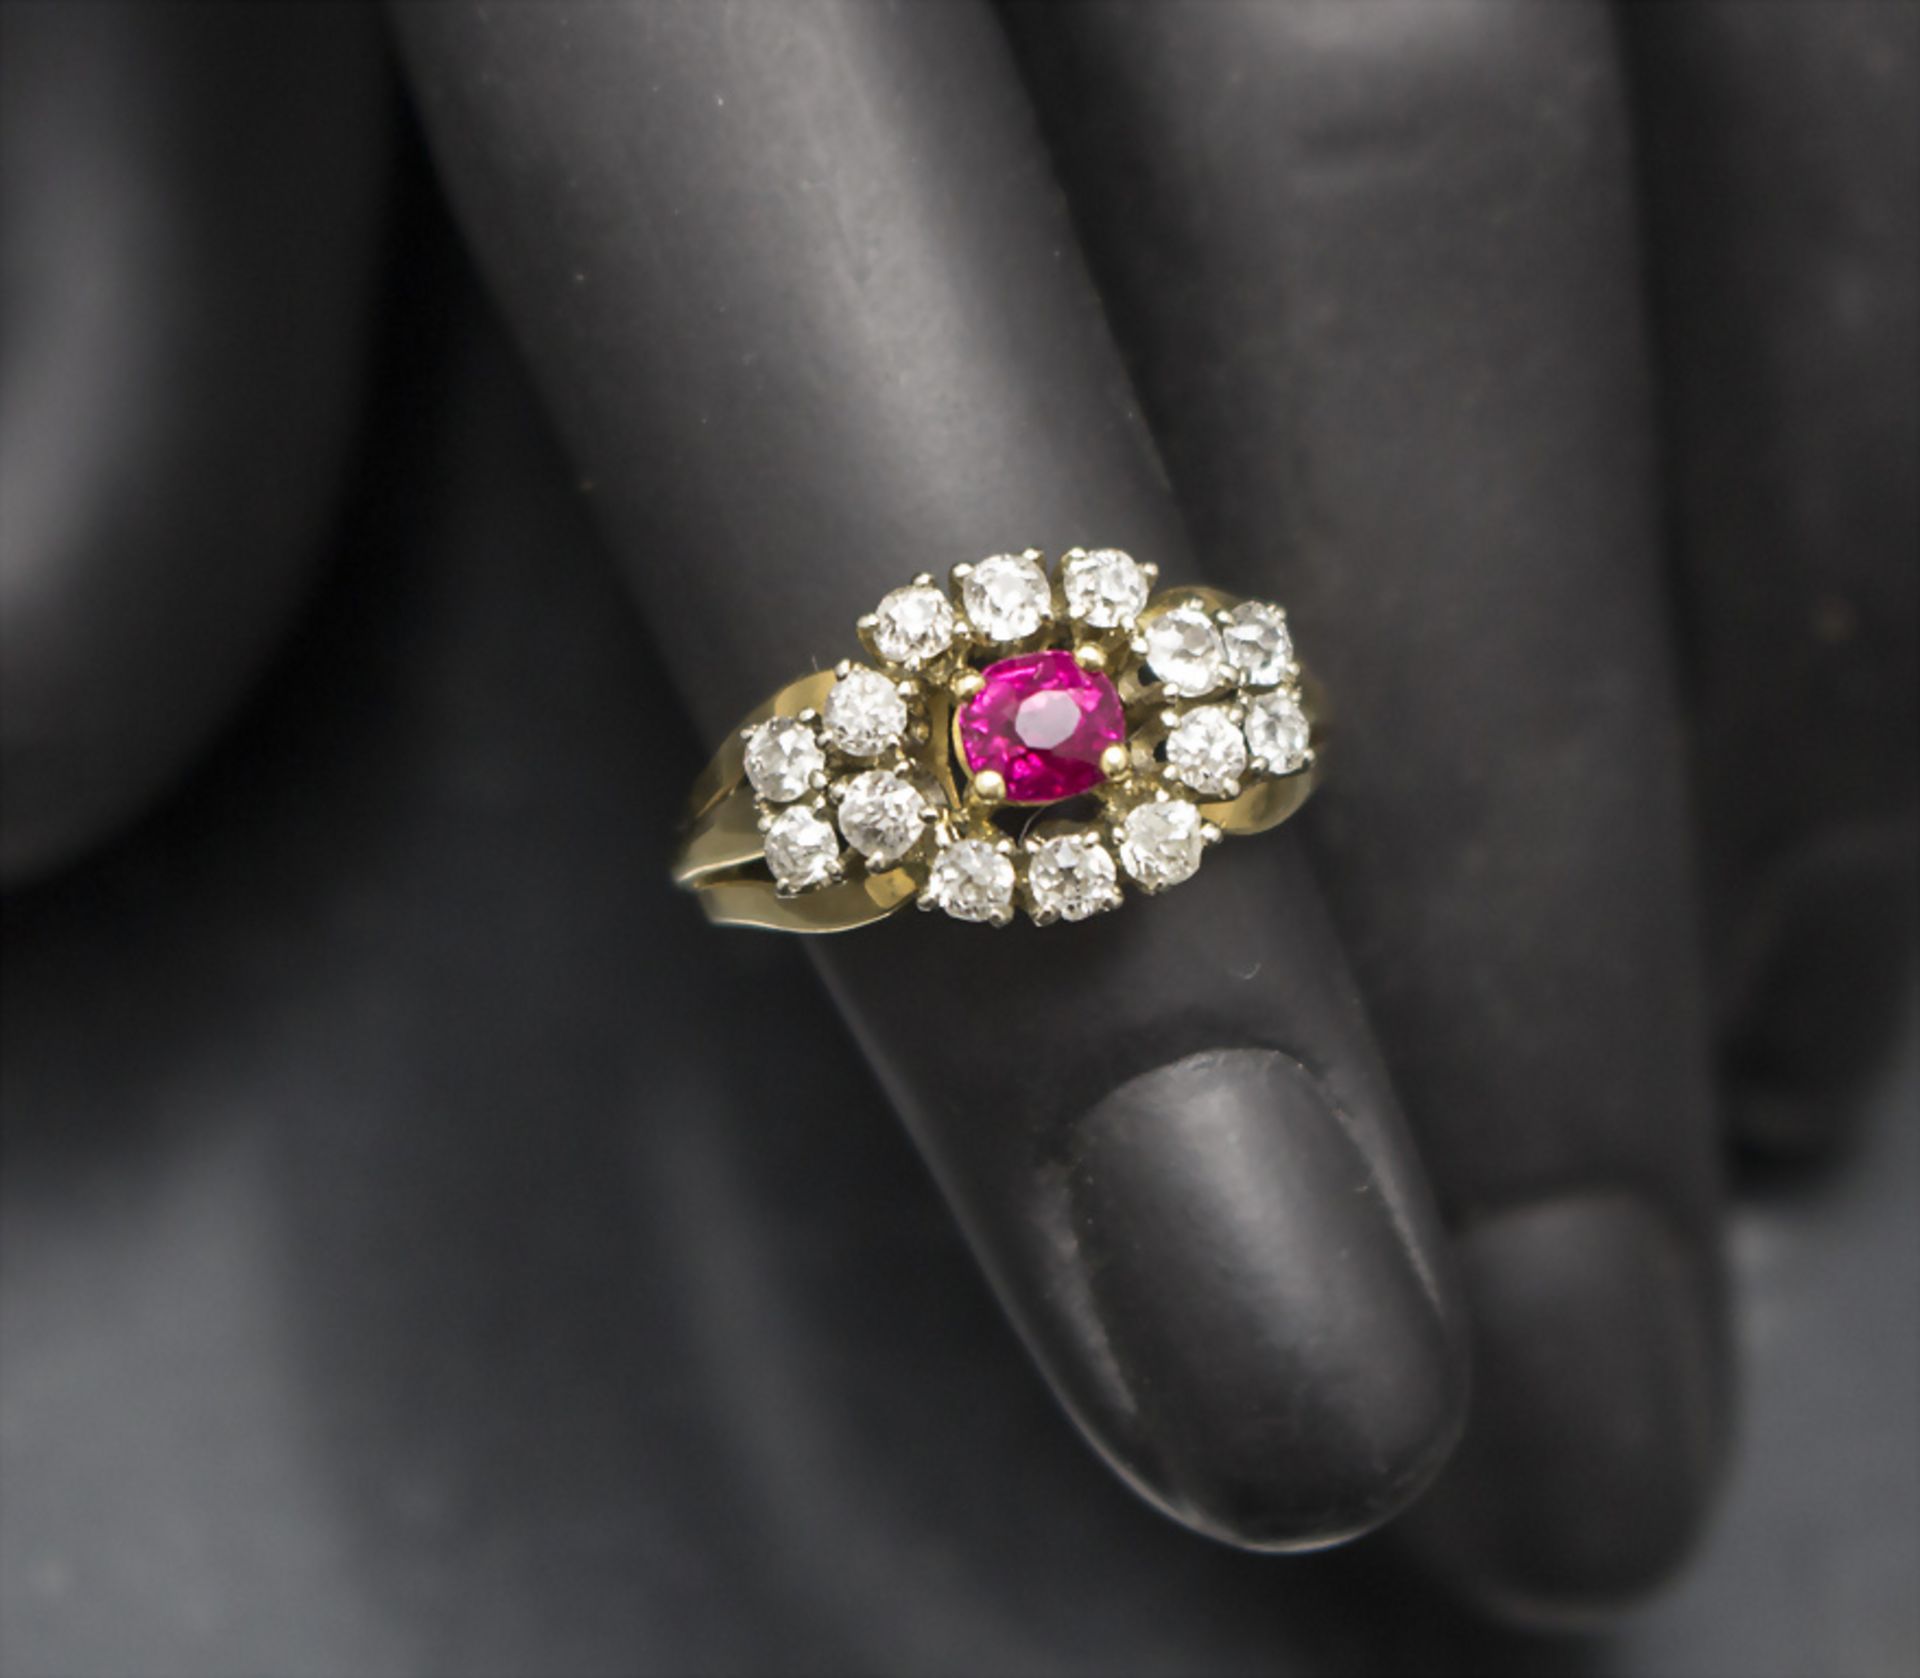 Damenring mit Rubin und Diamanten / A ladies 18ct gold ring with ruby and diamonds